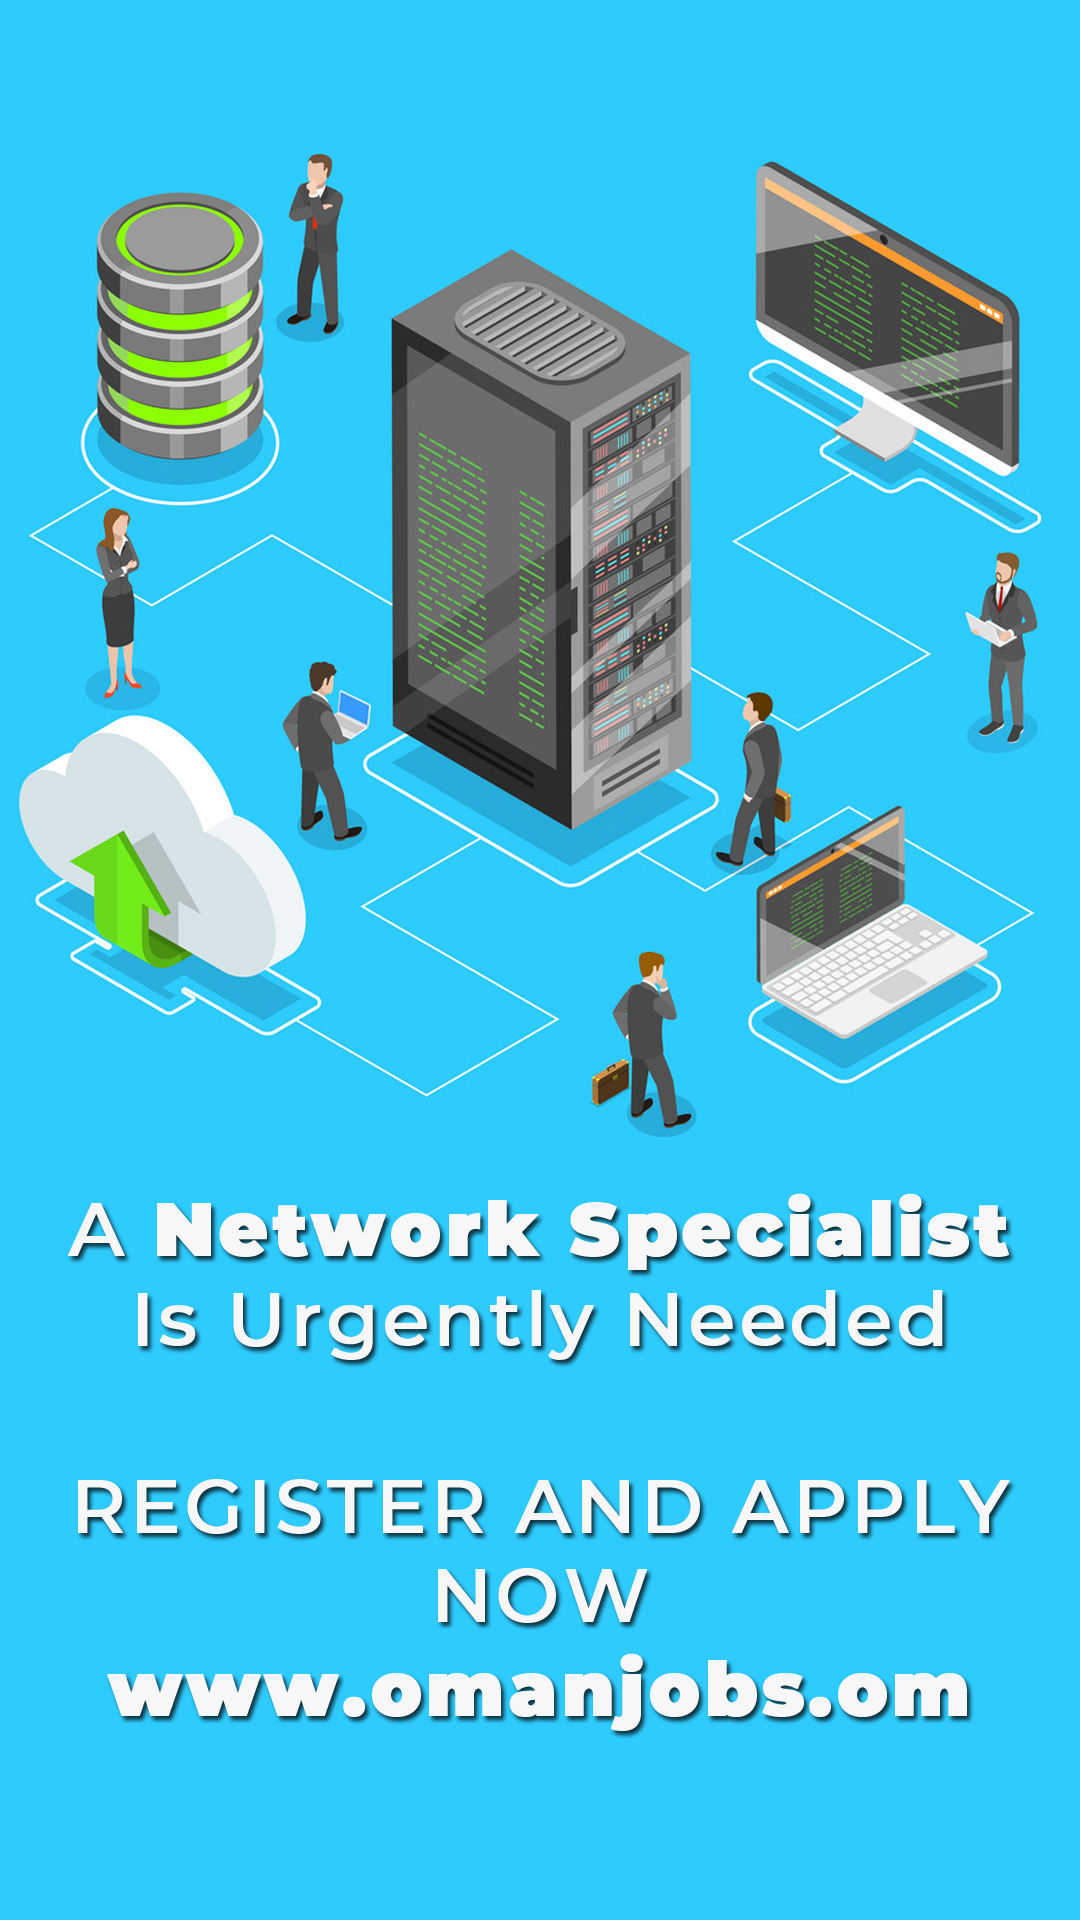 Hiring Network Specialist